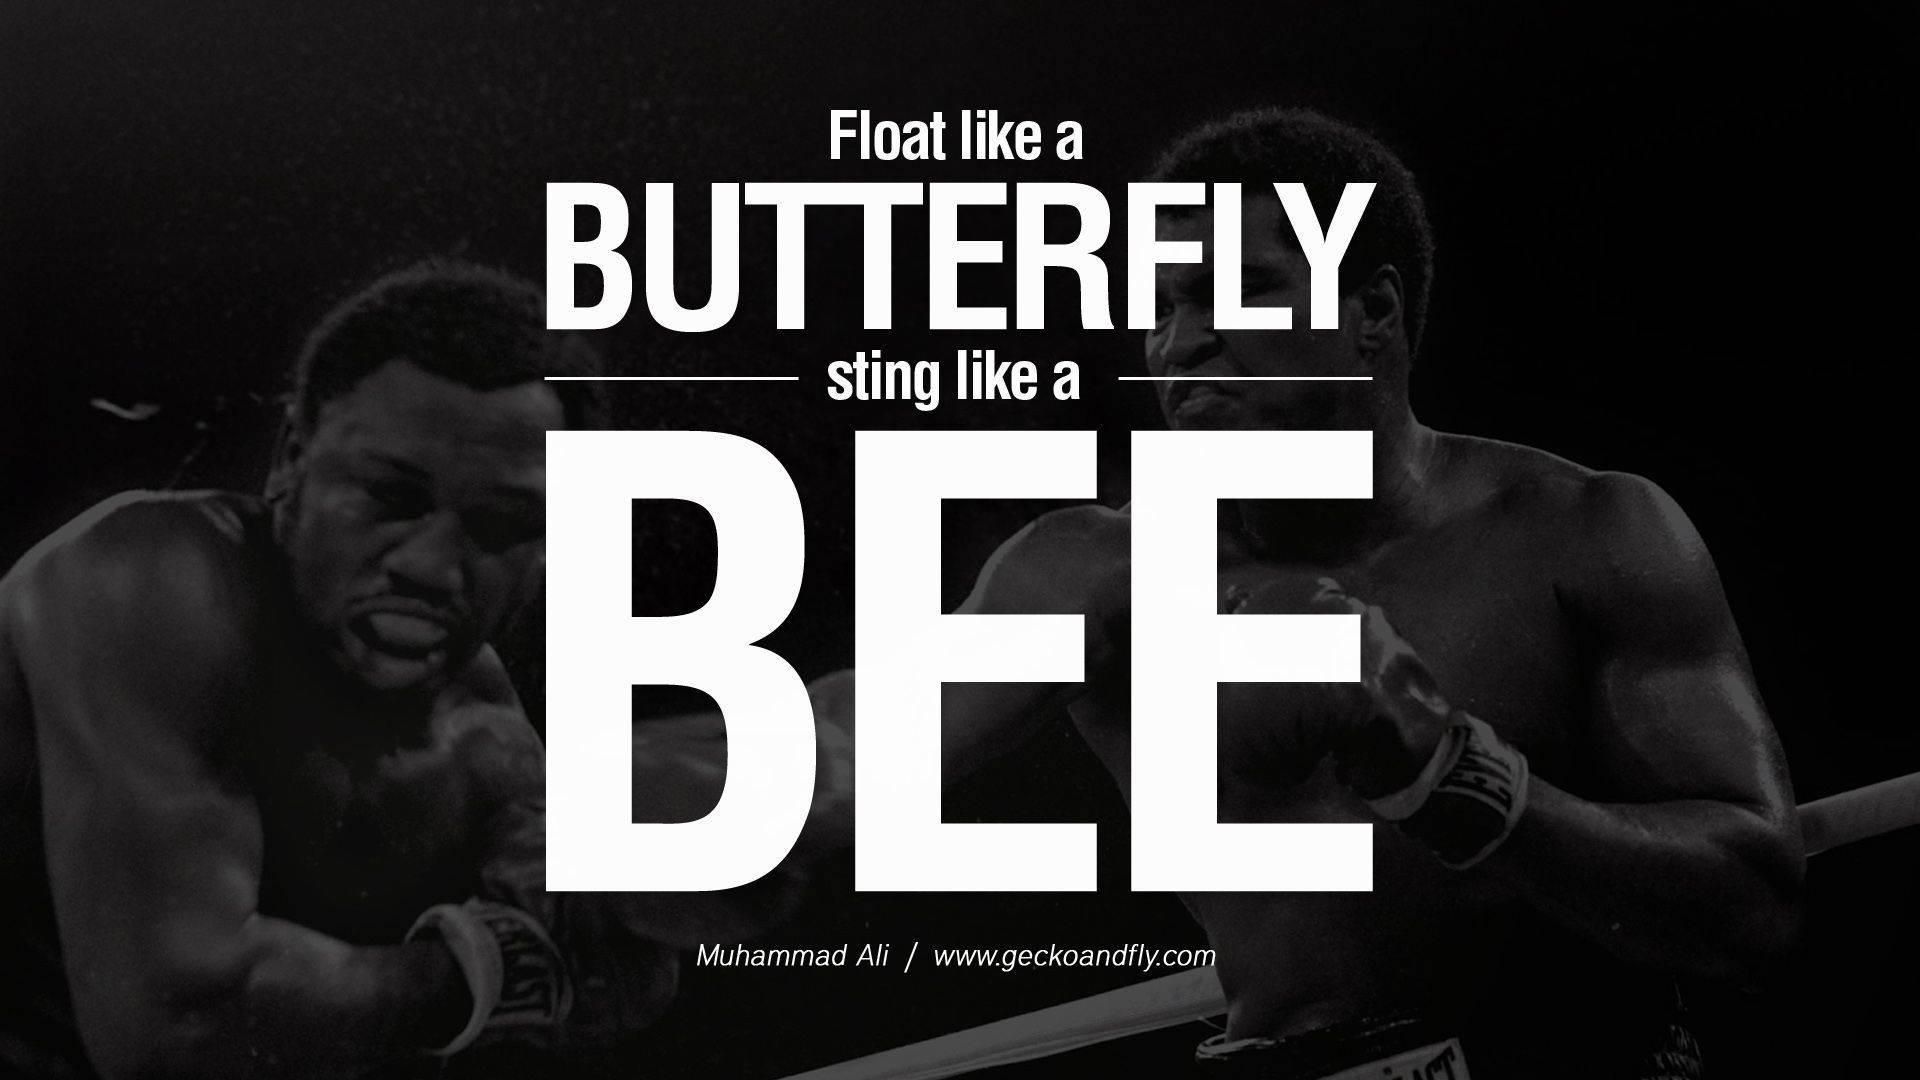 Muhammad Ali Great Inspiring Quote